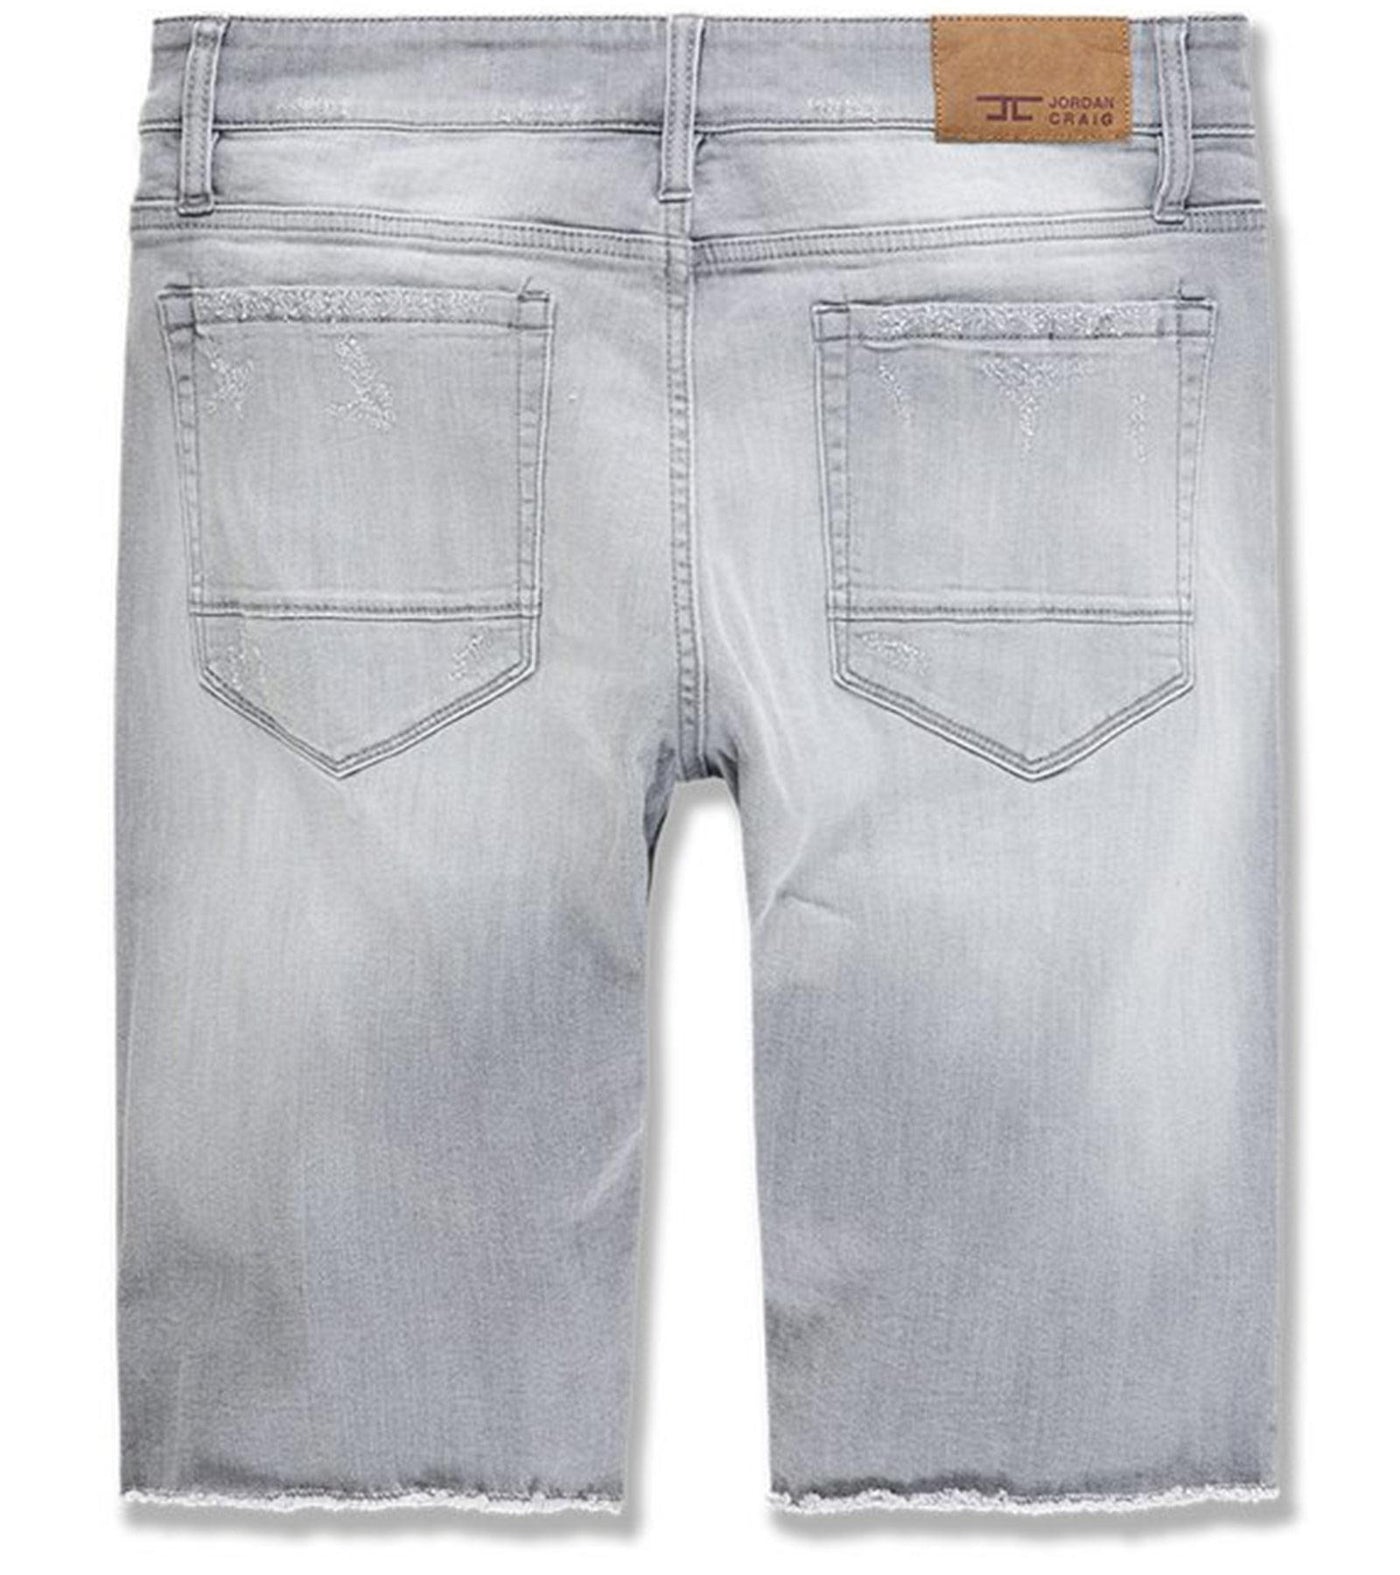 Edison Denim Shorts (Cement Wash) Rear | Jordan Craig